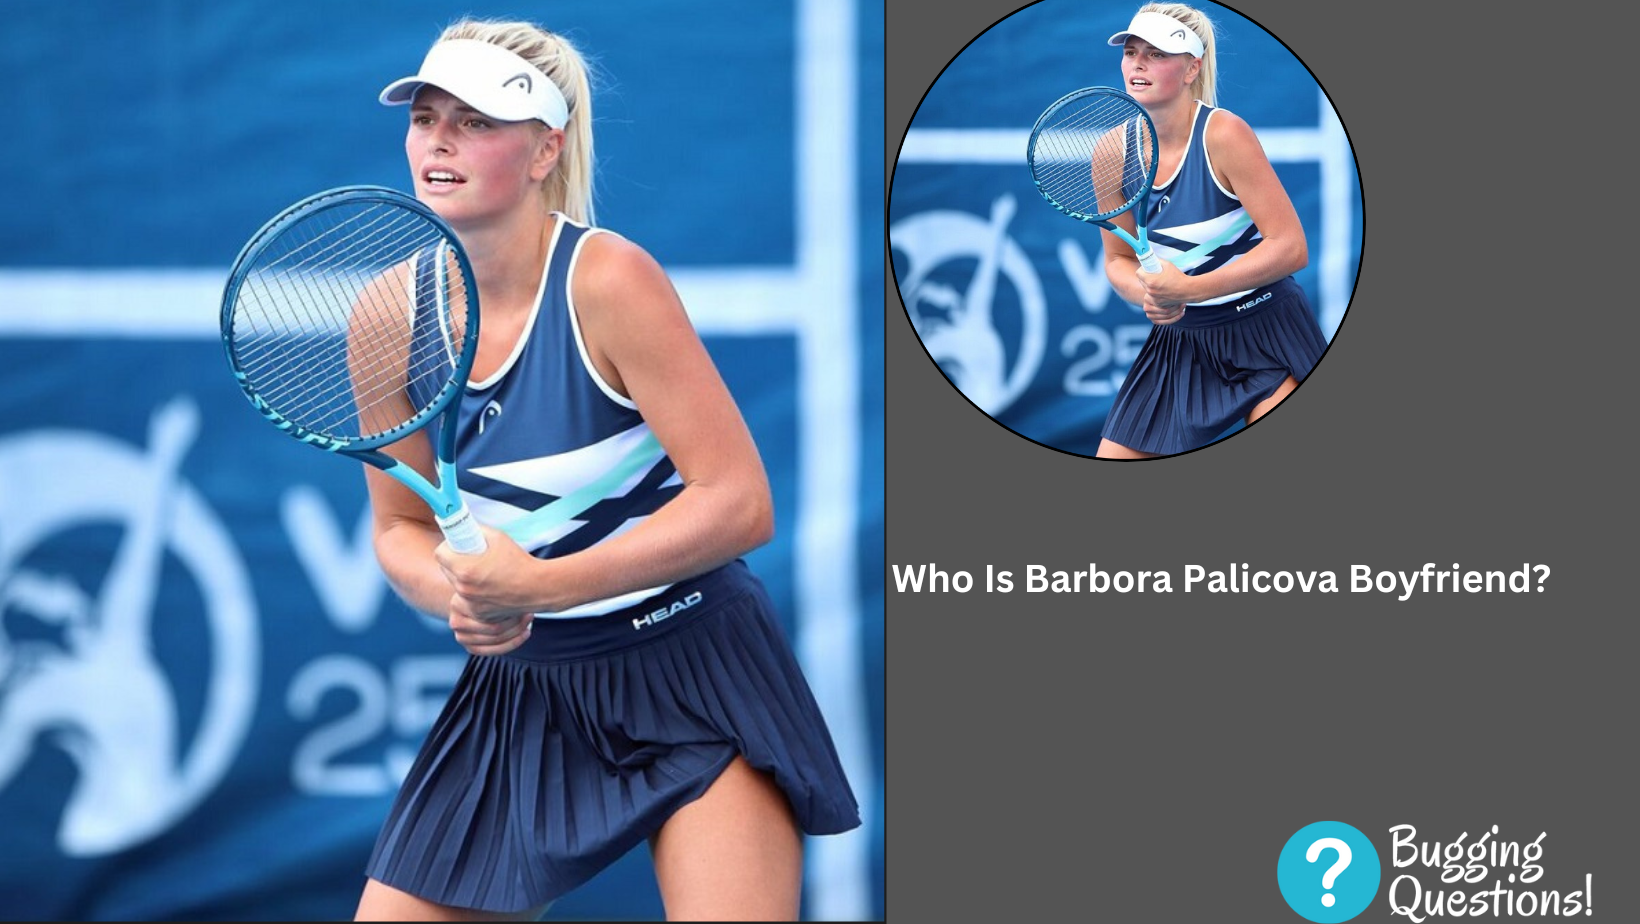 Who Is Barbora Palicova Boyfriend?